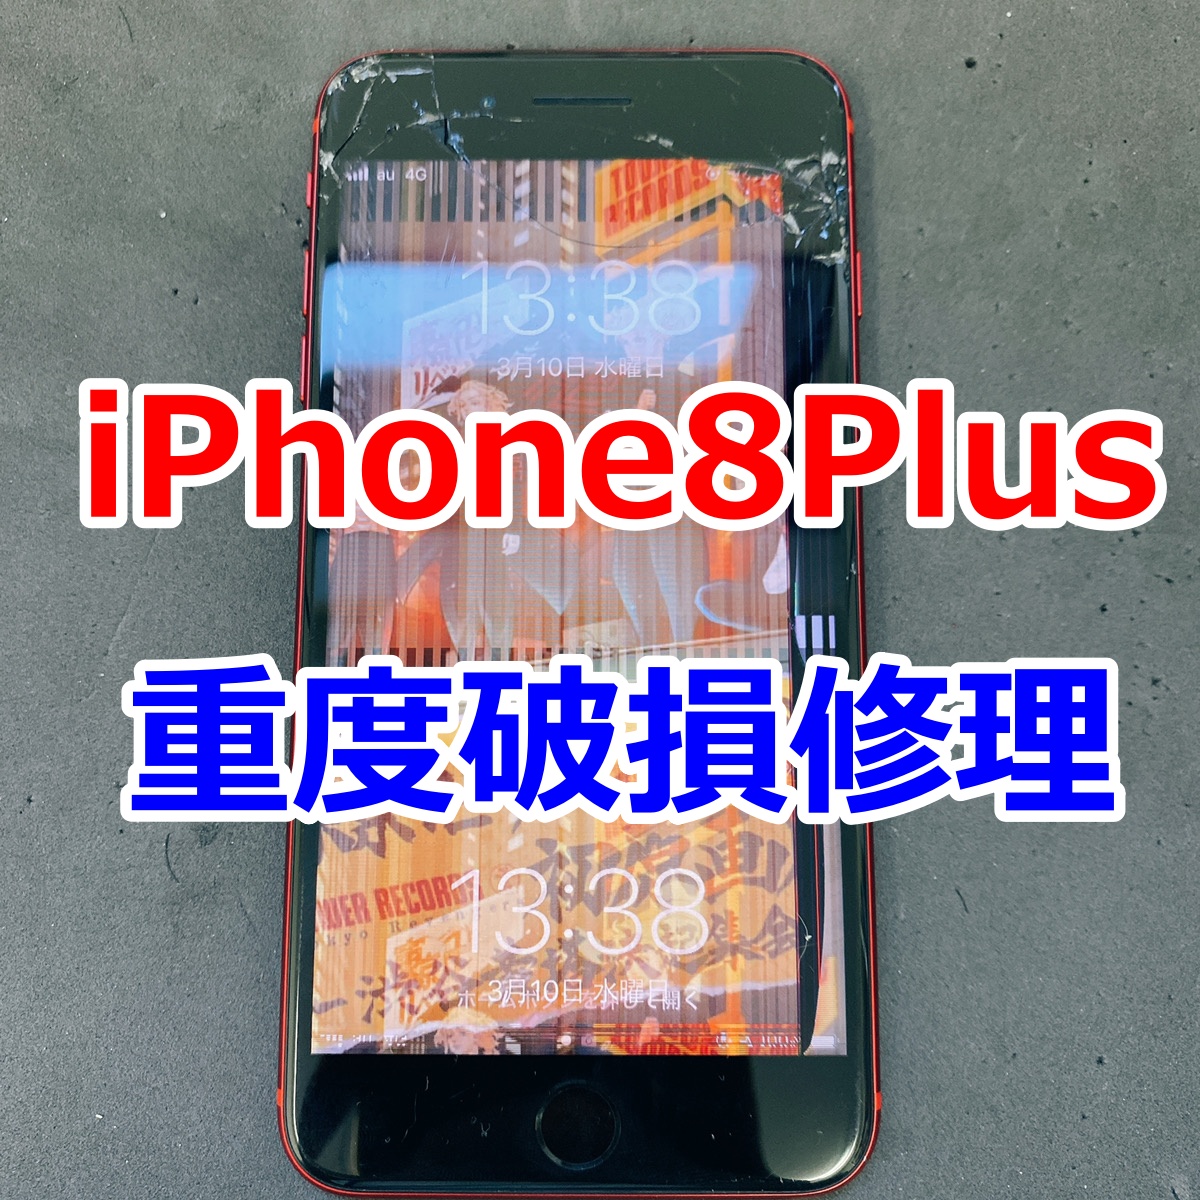 iPhone8Plus重度破損修理